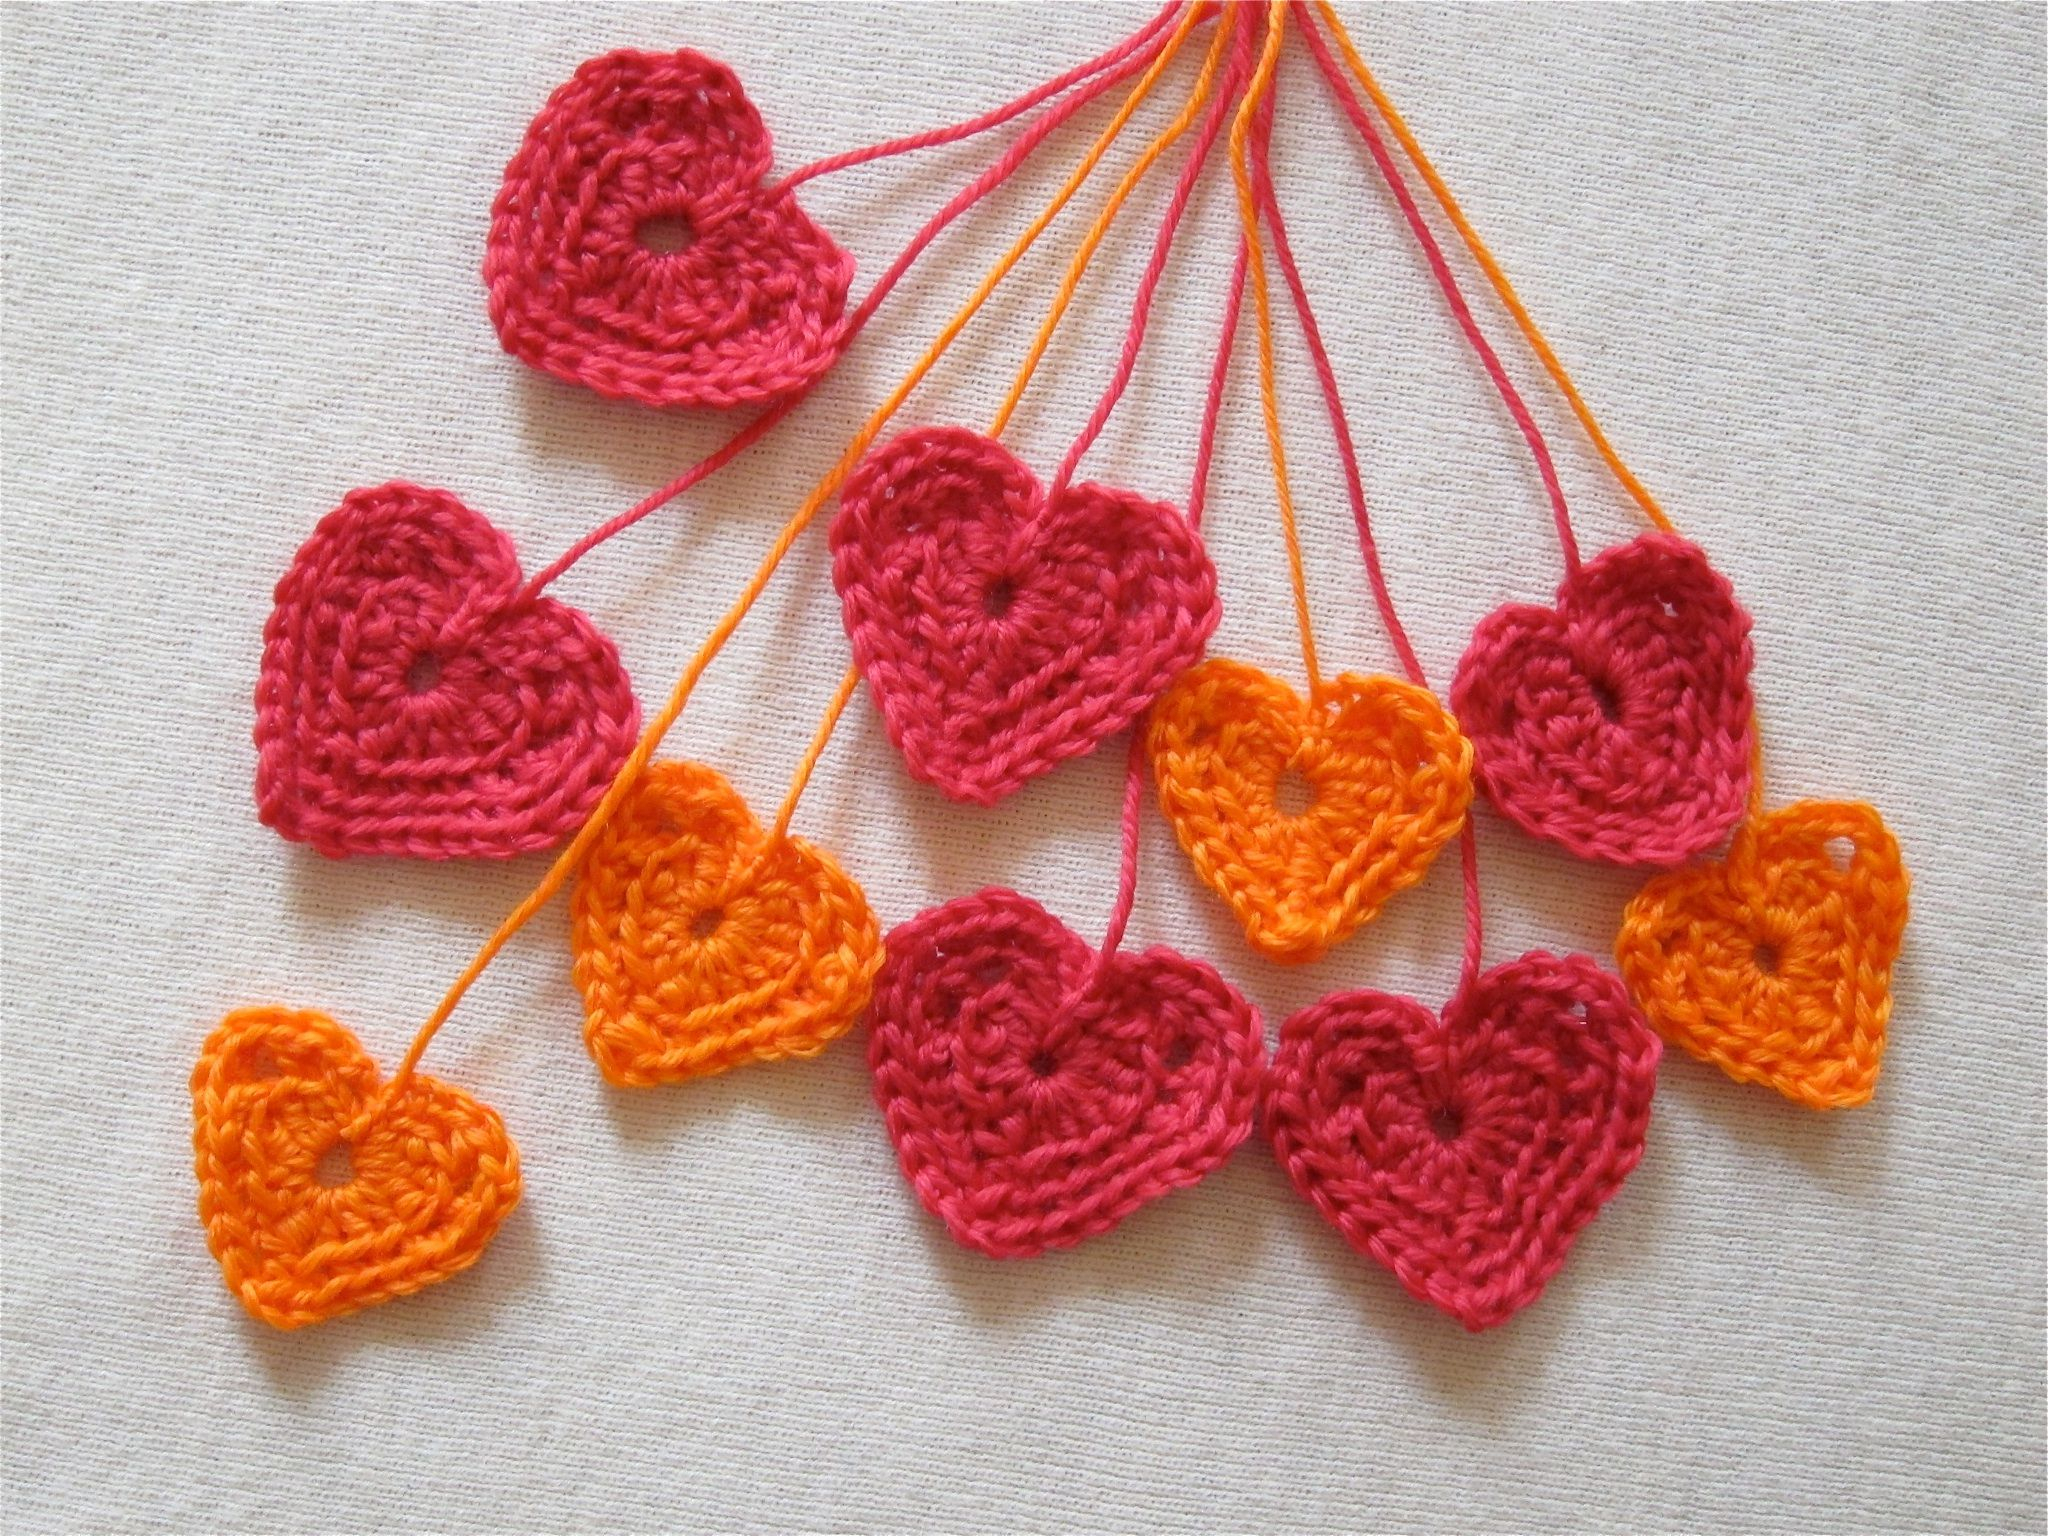 Crochet Heart Pattern 10 Crochet Heart Patterns For Valentines Day